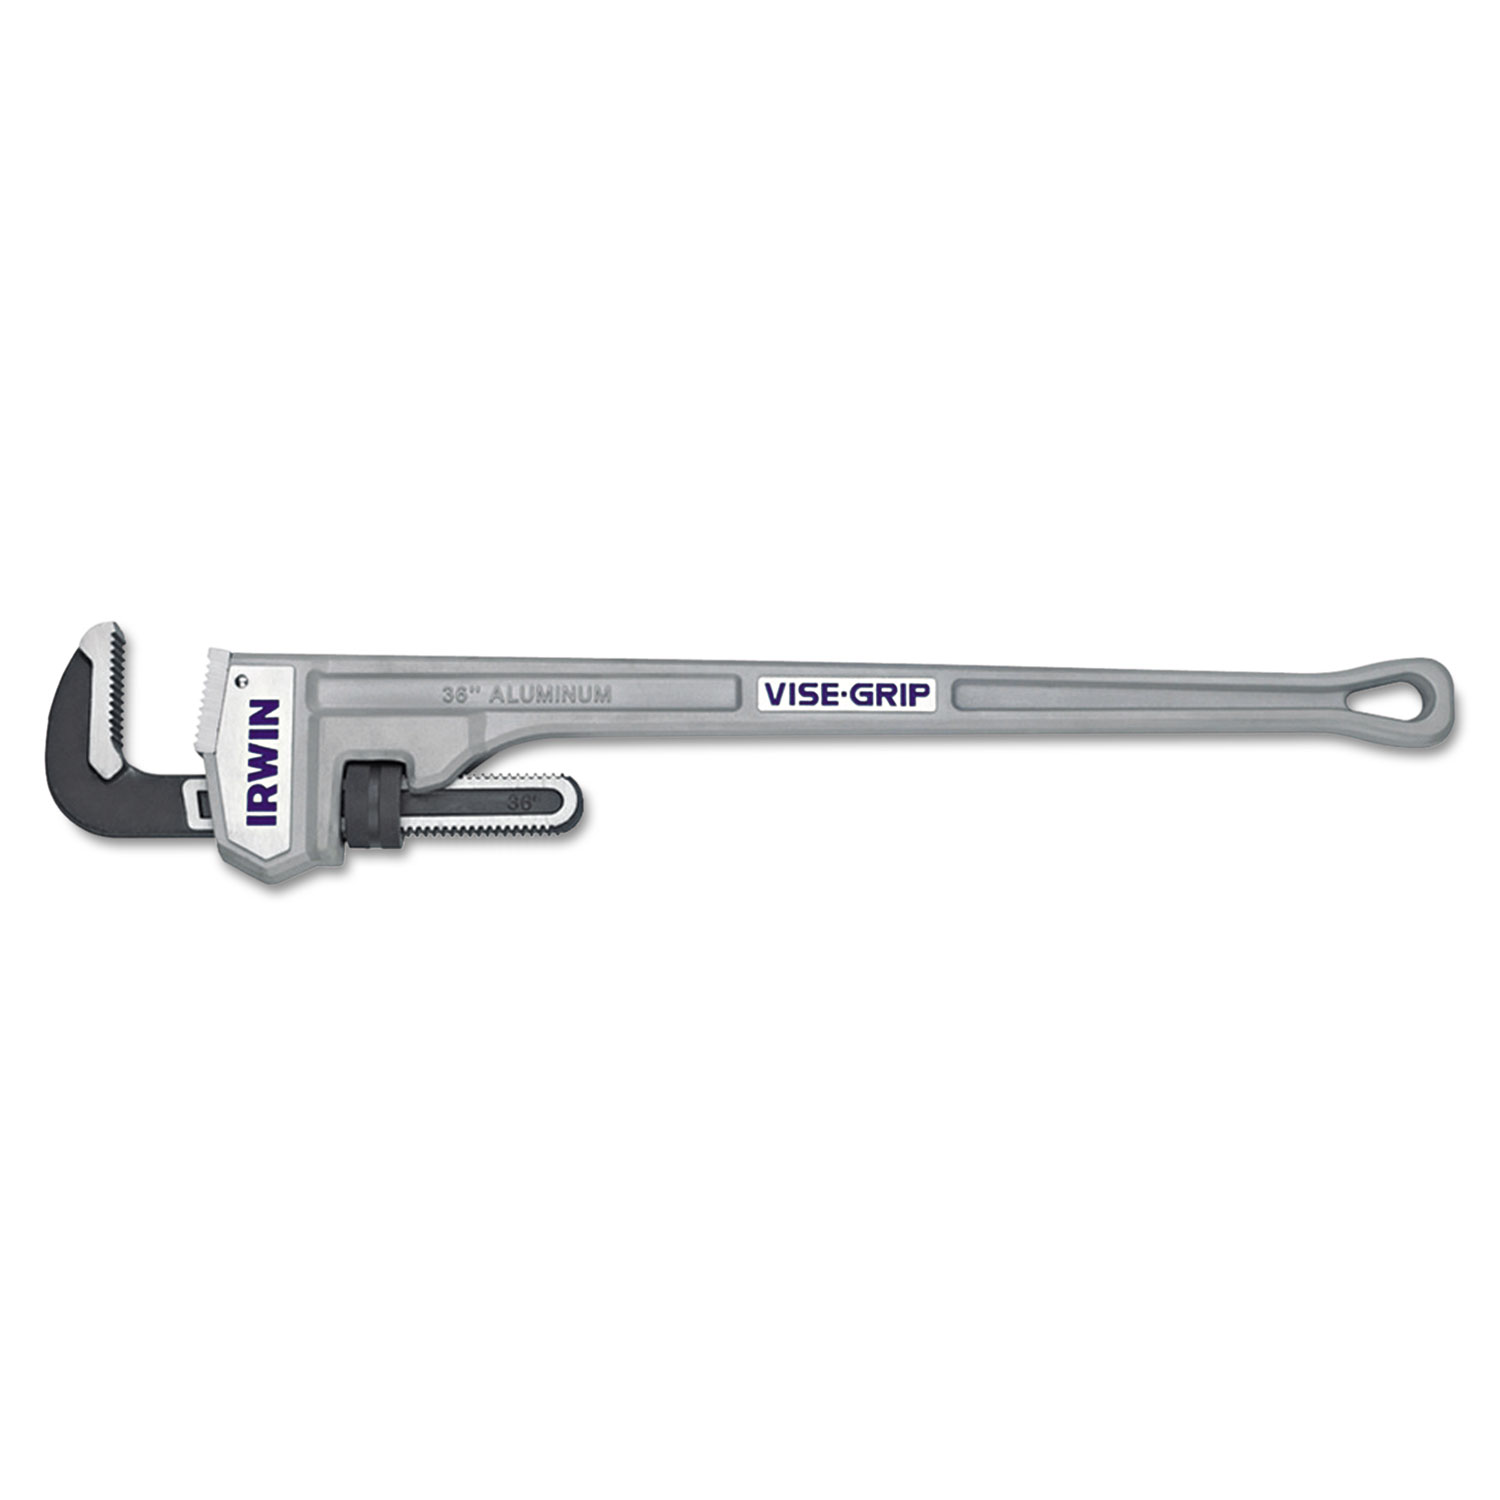 IRWIN Cast Aluminum Pipe Wrench, 36 Long, 5 Capacity